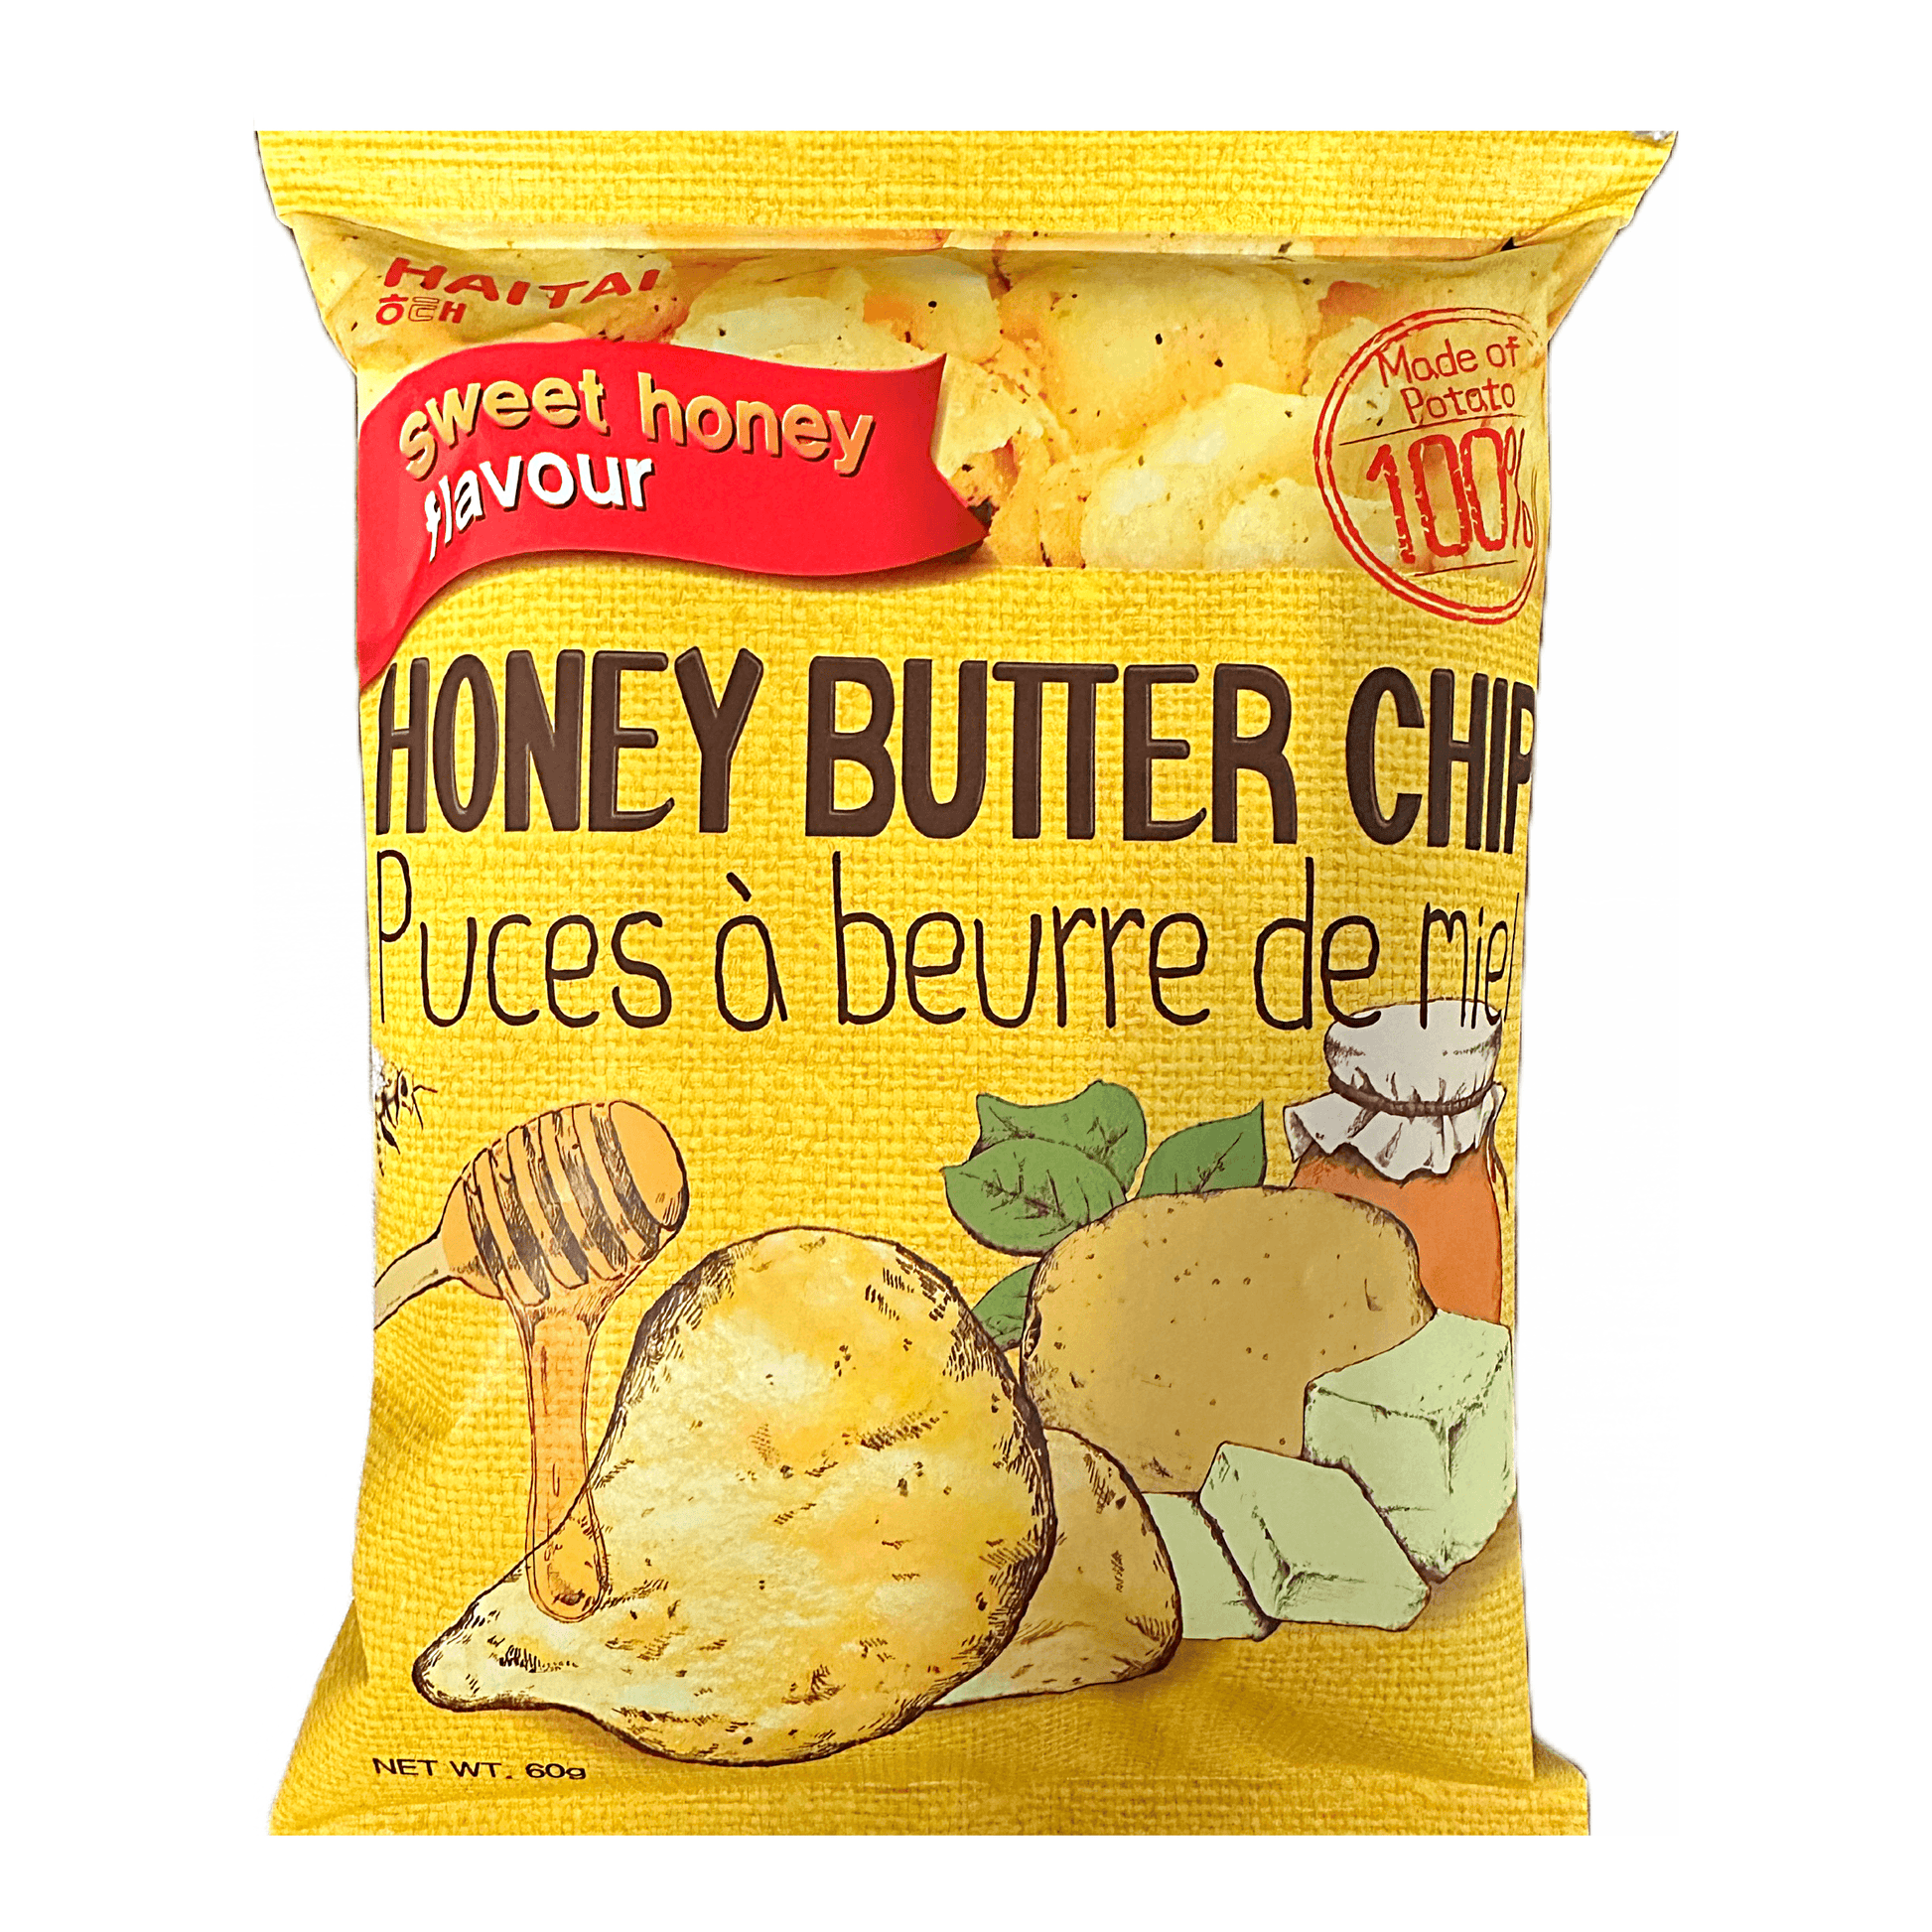 Haitai Honey Butter Chips 60g - The Snacks Box - Asian Snacks Store - The Snacks Box - Korean Snack - Japanese Snack